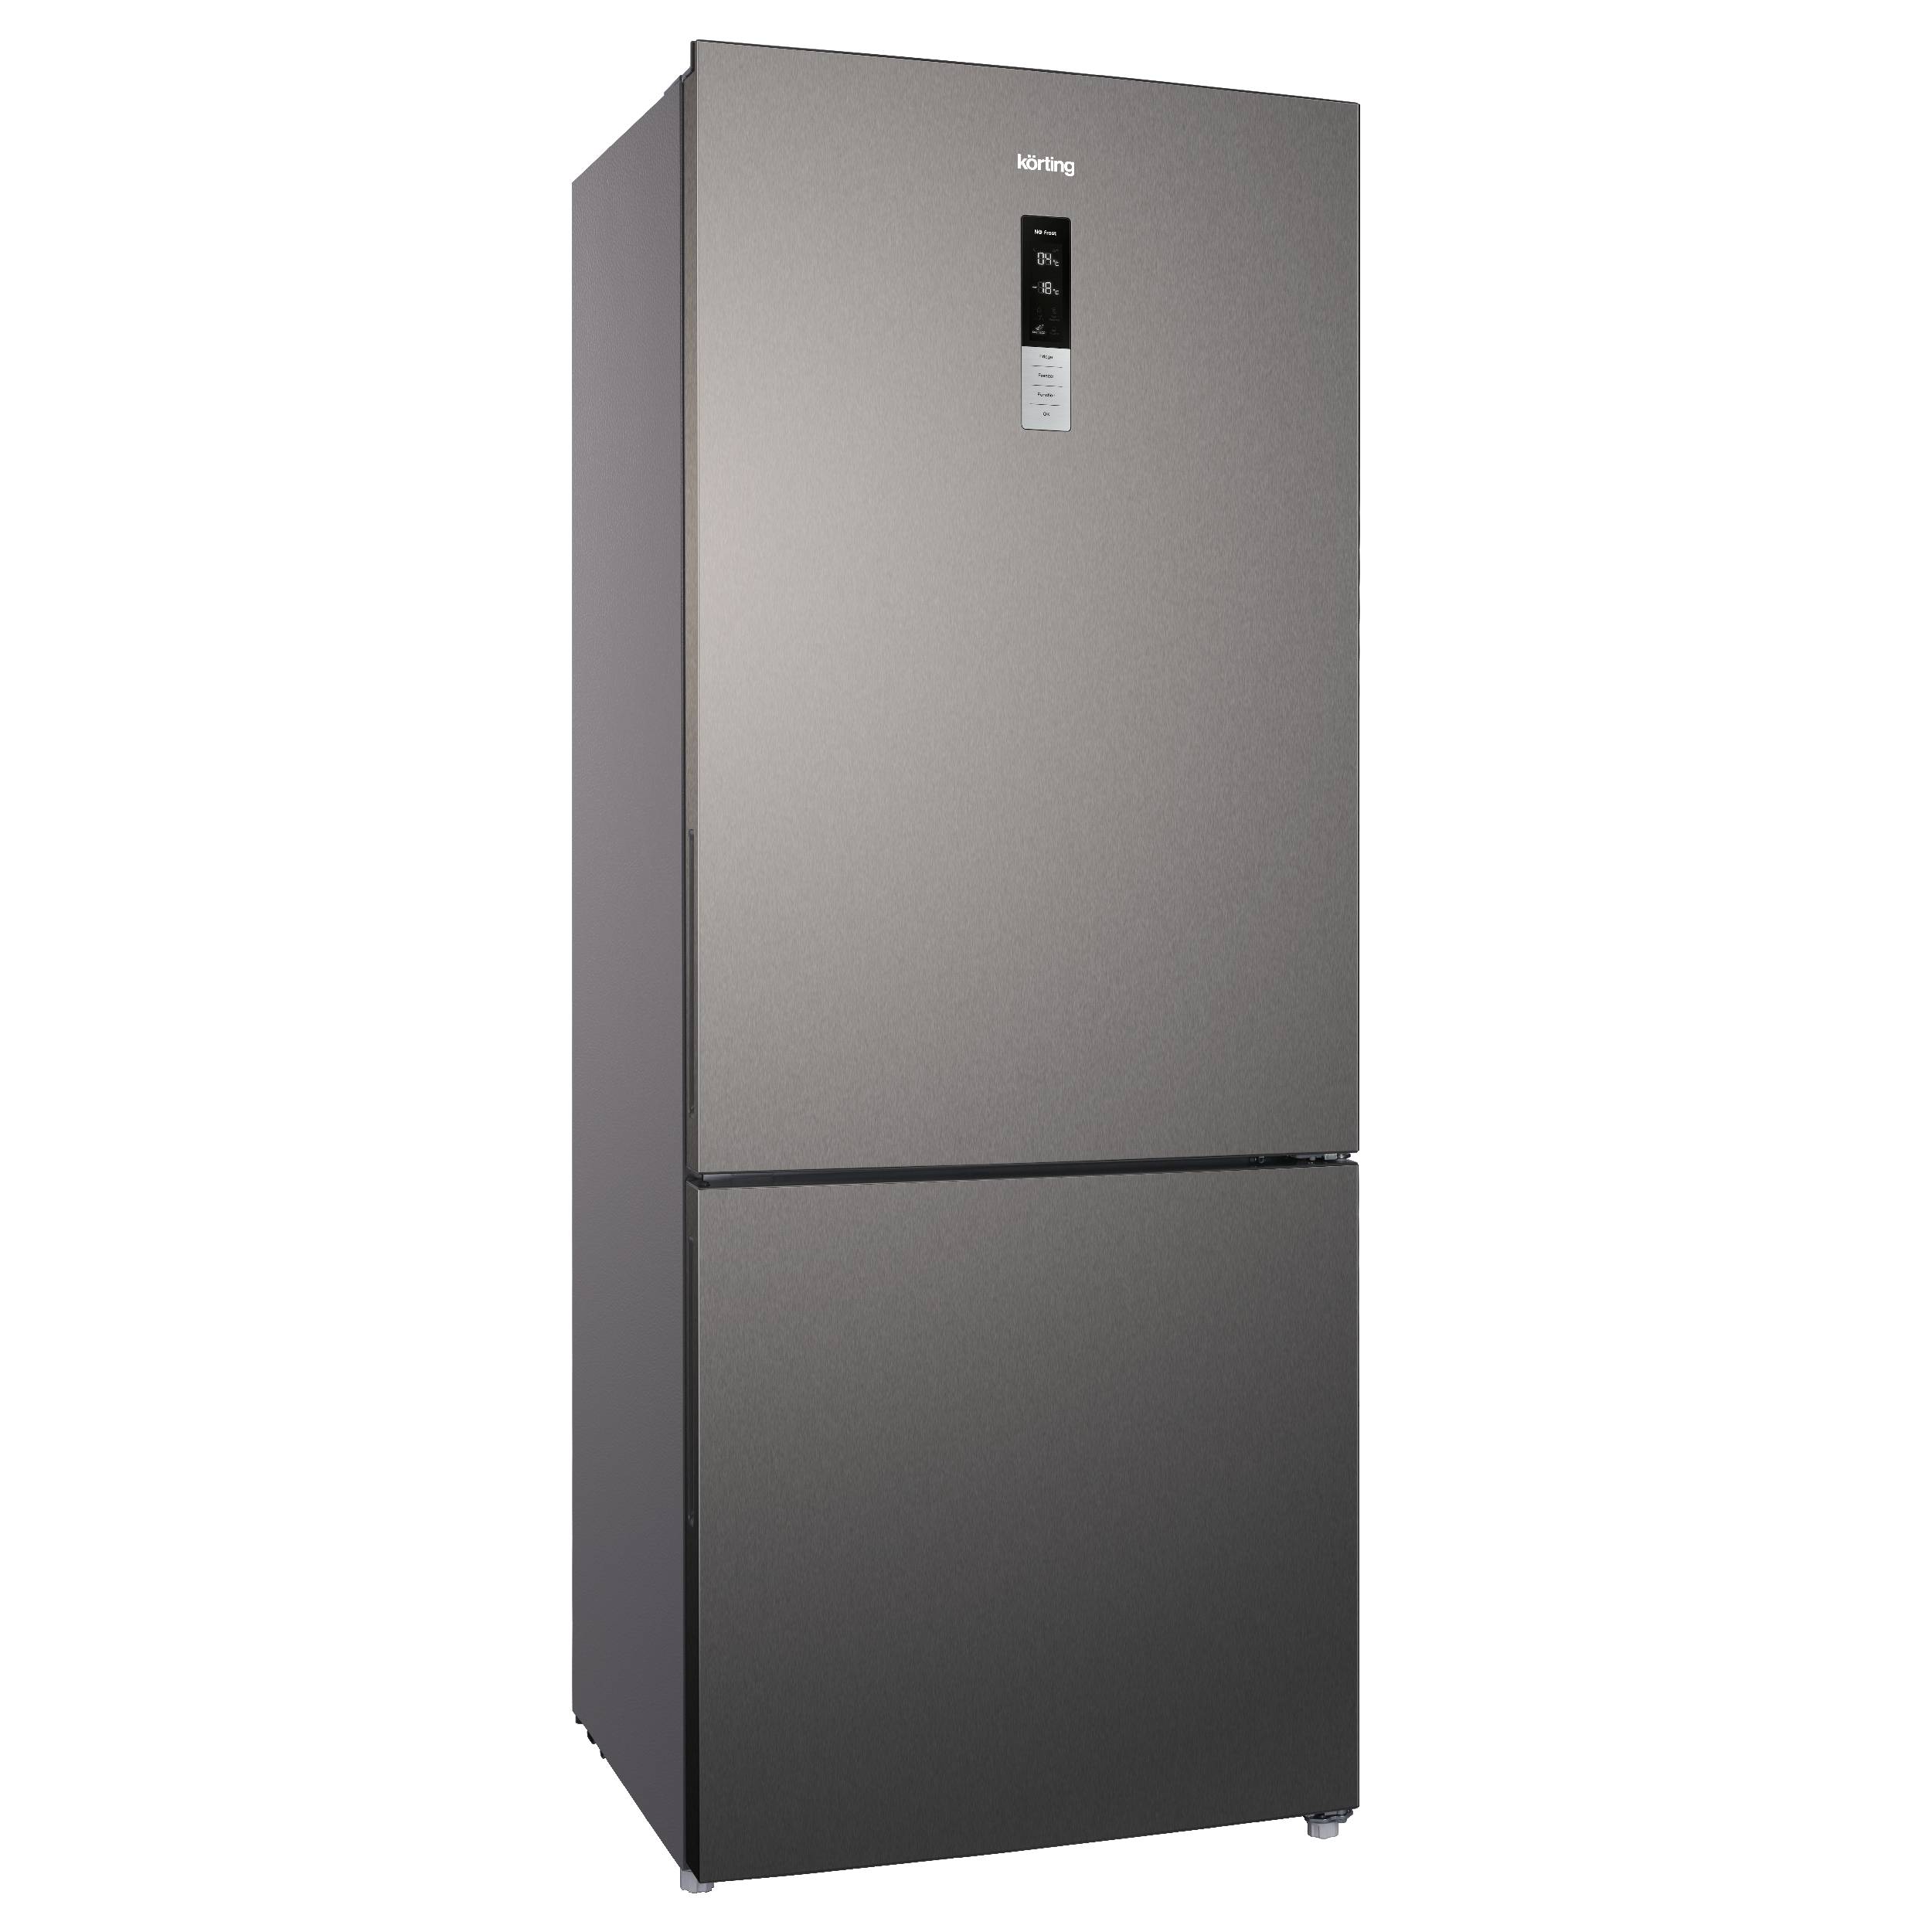 Холодильник Korting KNFC 72337 X серебристый, серый двухкамерный холодильник korting knfc 72337 xn